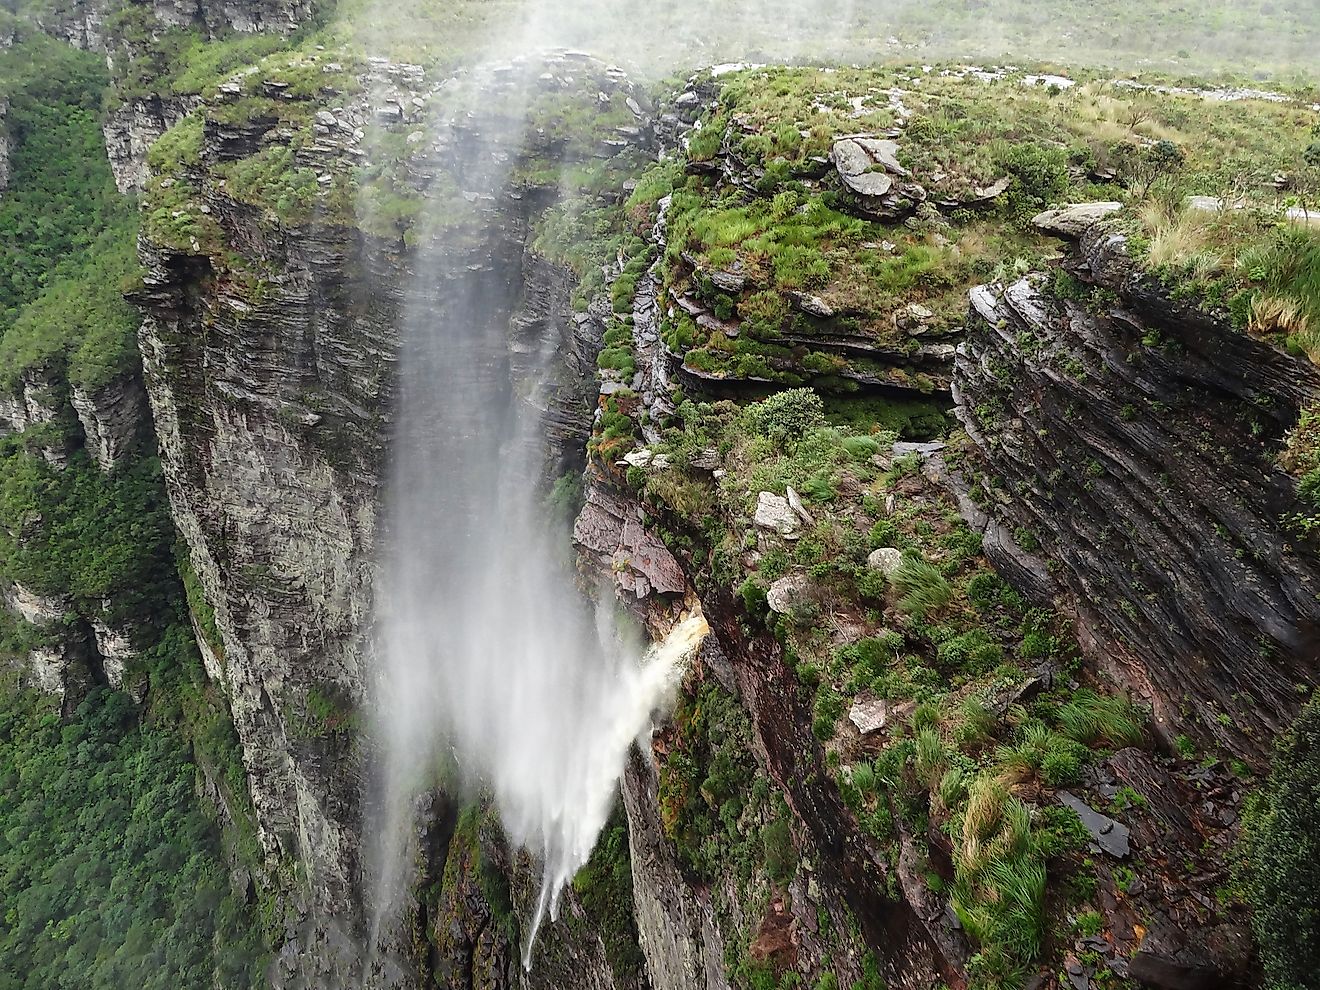 Cachoeira da Fumaça (Smoke Waterfall) reversed by the wind in Chapada Diamantina National Park, Brazil. Image credit: Larissa Chilanti/Shutterstock.com